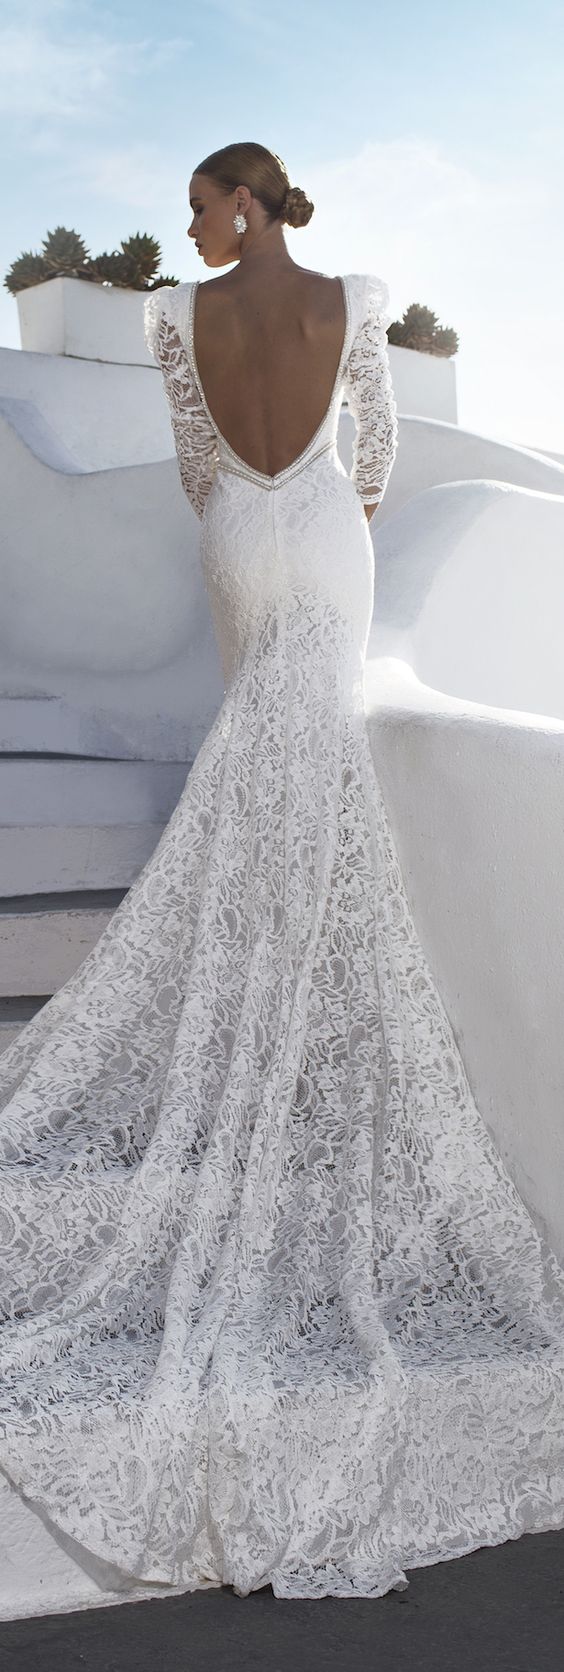 Julie Vino mermaid wedding gown with long lace sleeves